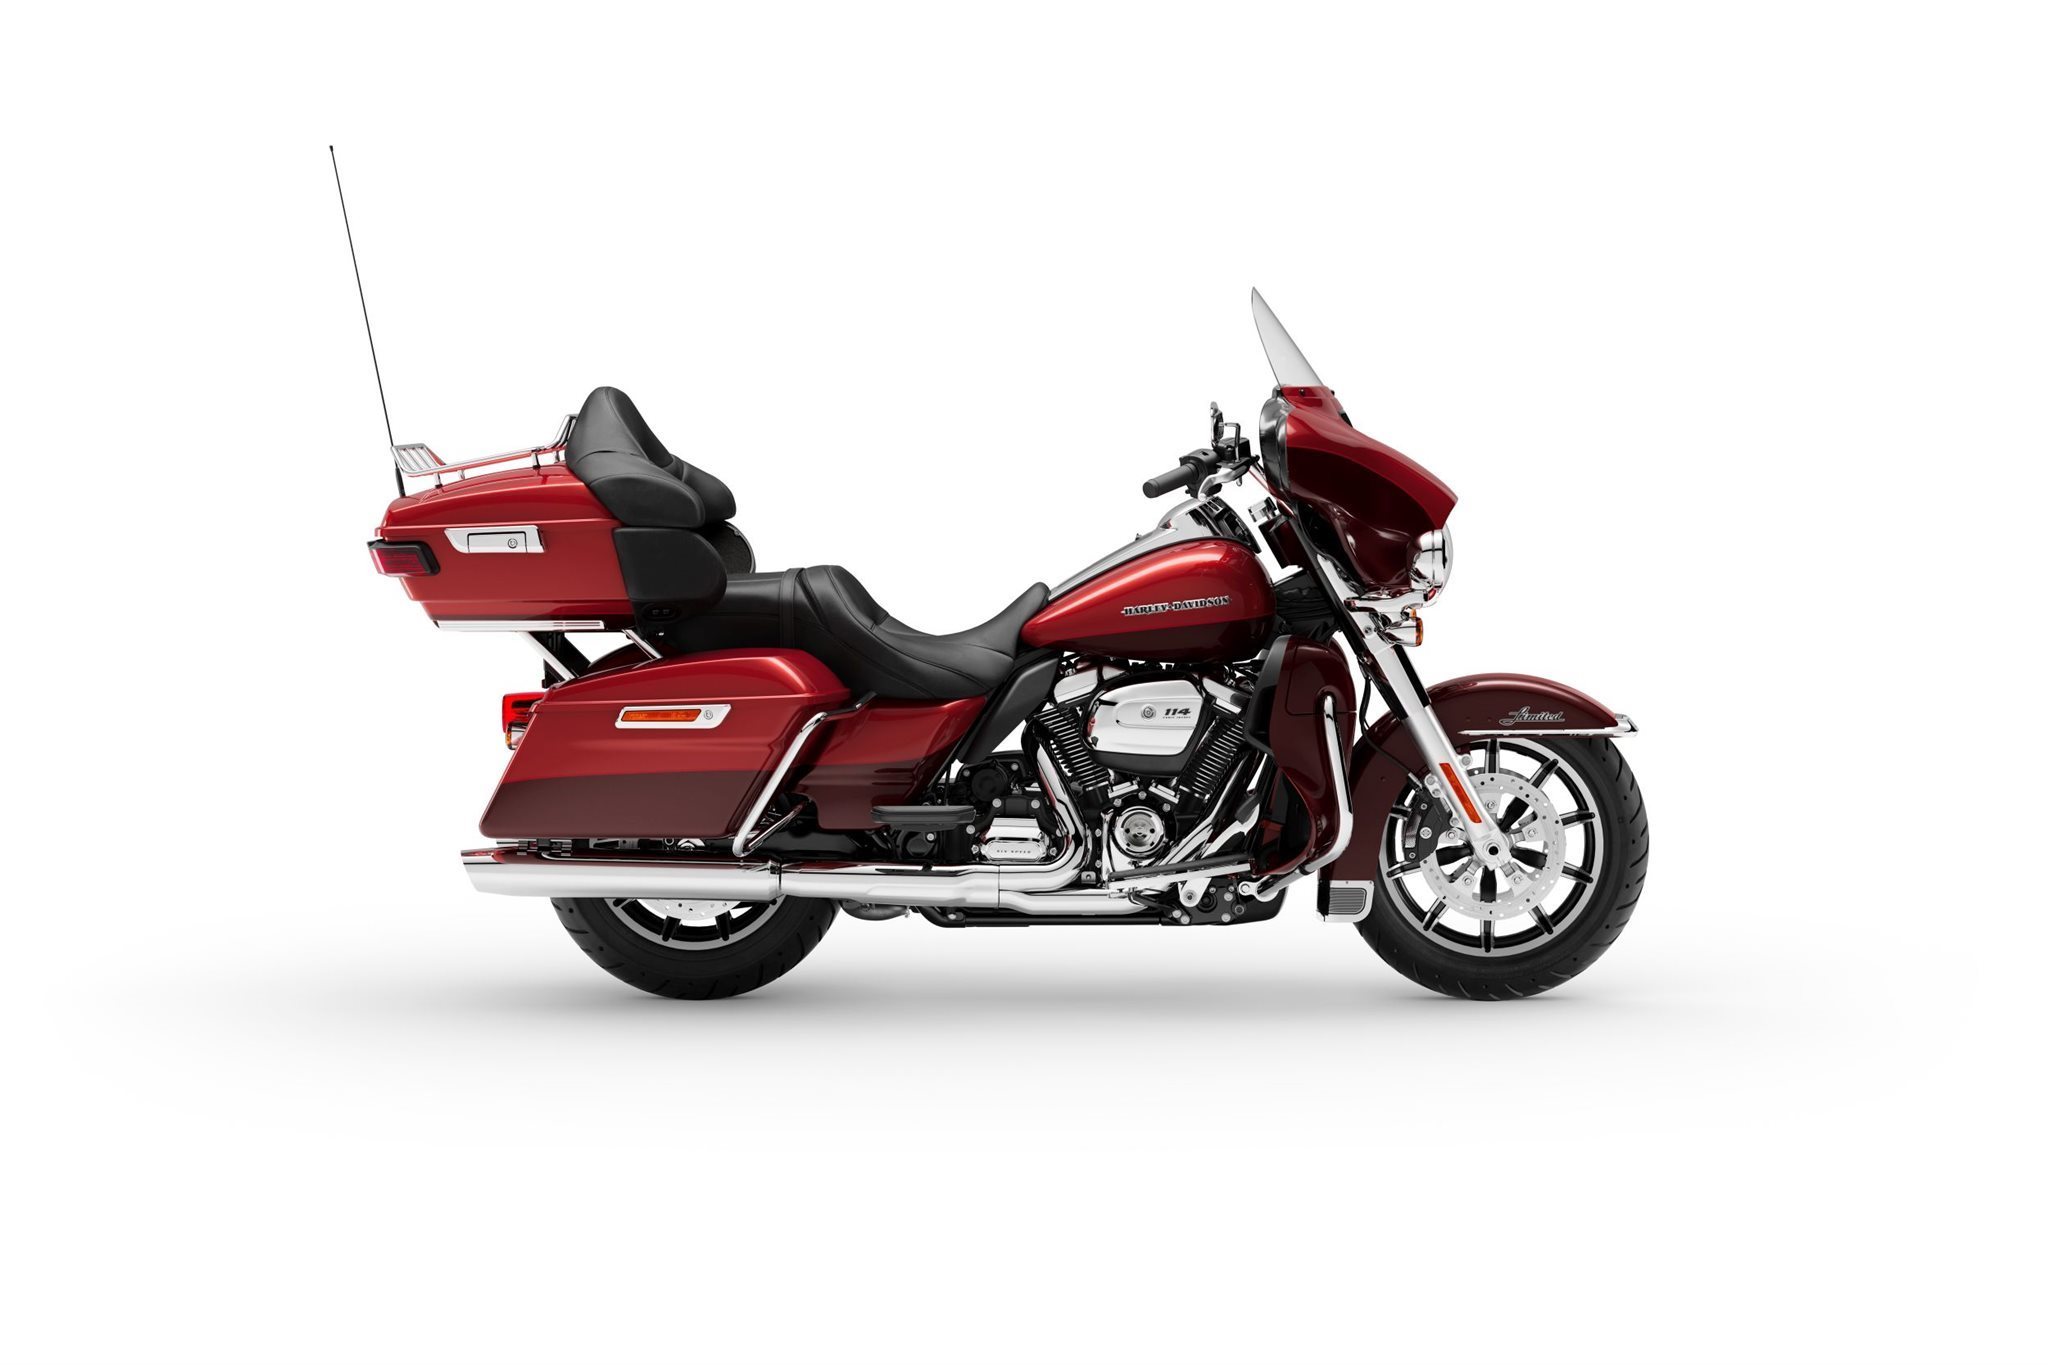 Motorrad Vergleich Harley Davidson Touring Electra Glide Ultra Limited Flhtk 2021 Vs Honda Gl 1800 Goldwing Tour 2021